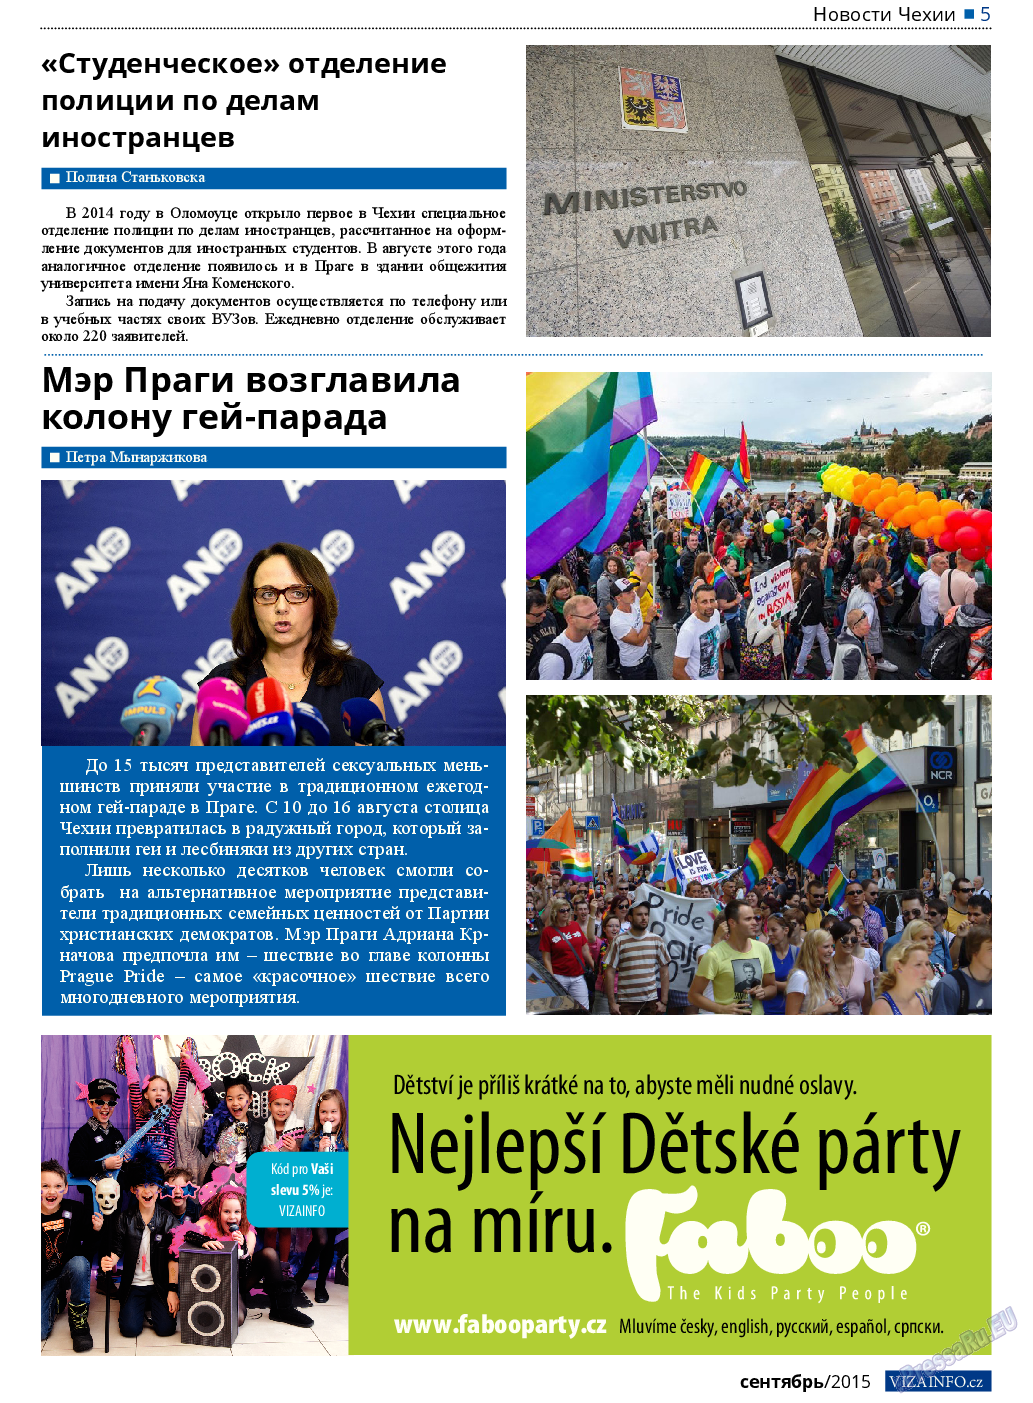 Vizainfo.cz, газета. 2015 №72 стр.5